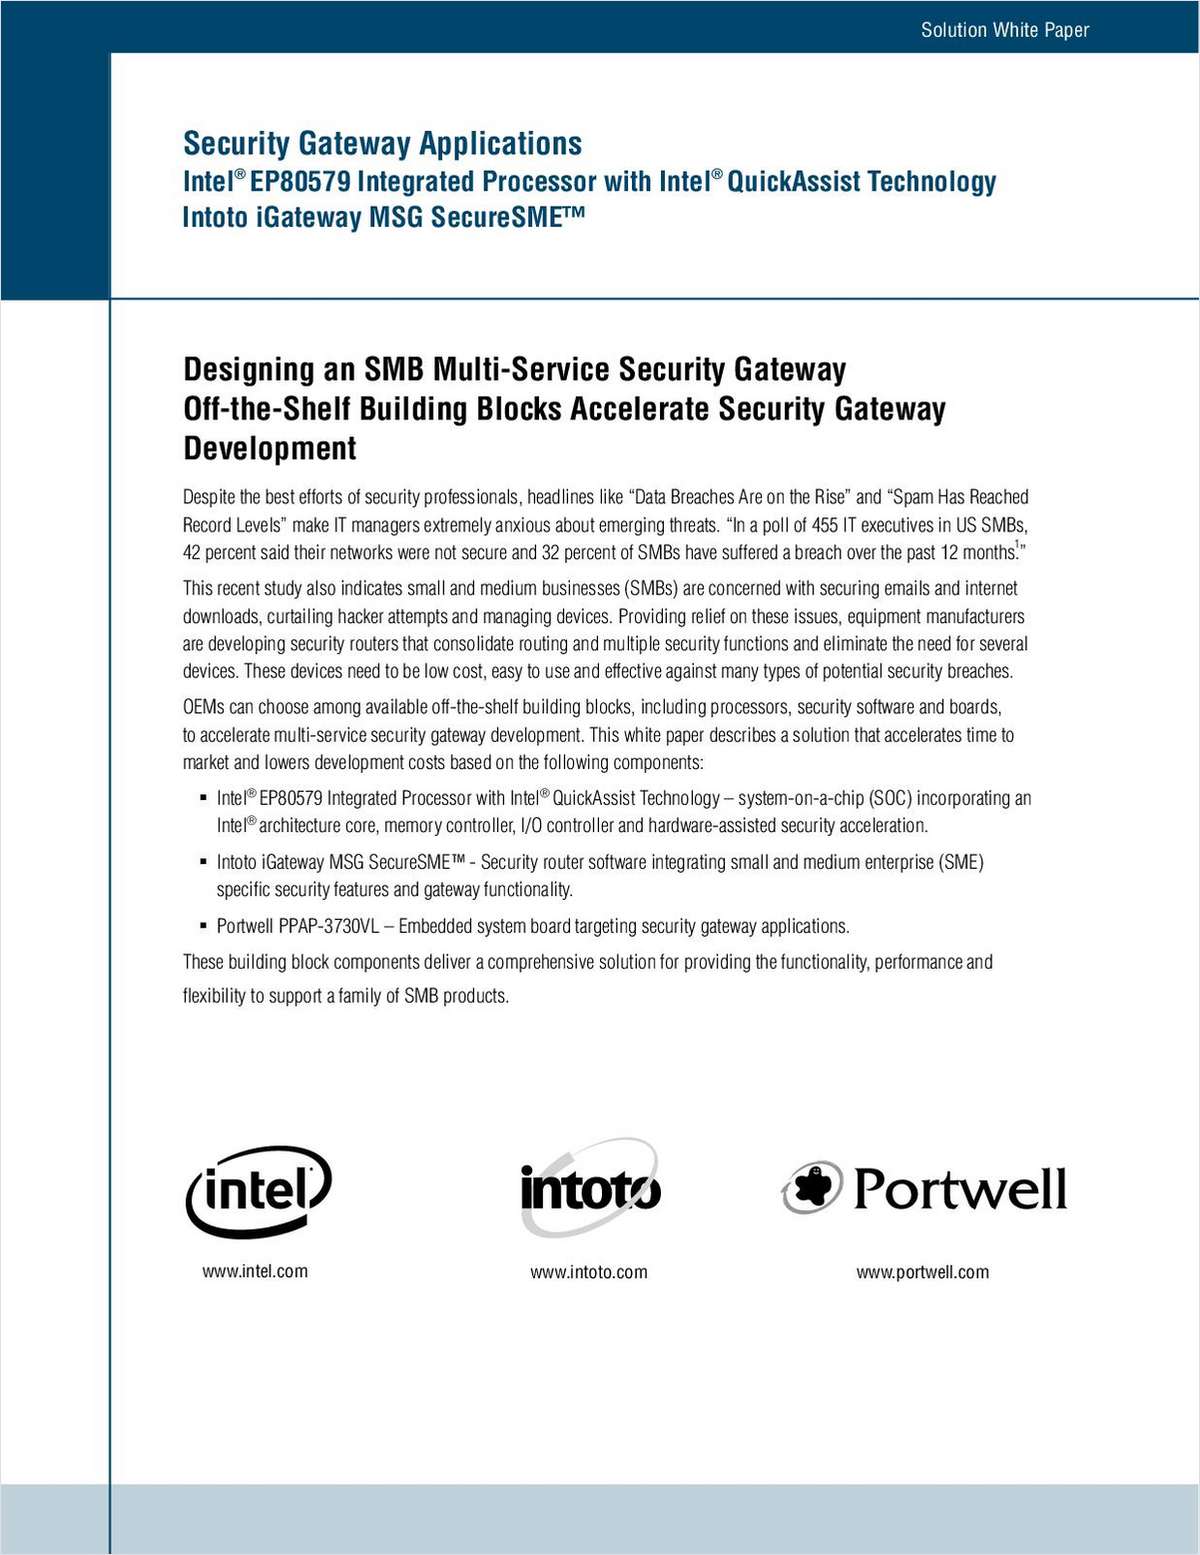 Designing an SMB Multi-Service Security Gateway Off-the-Shelf Building Blocks Accelerate Security Gateway Development